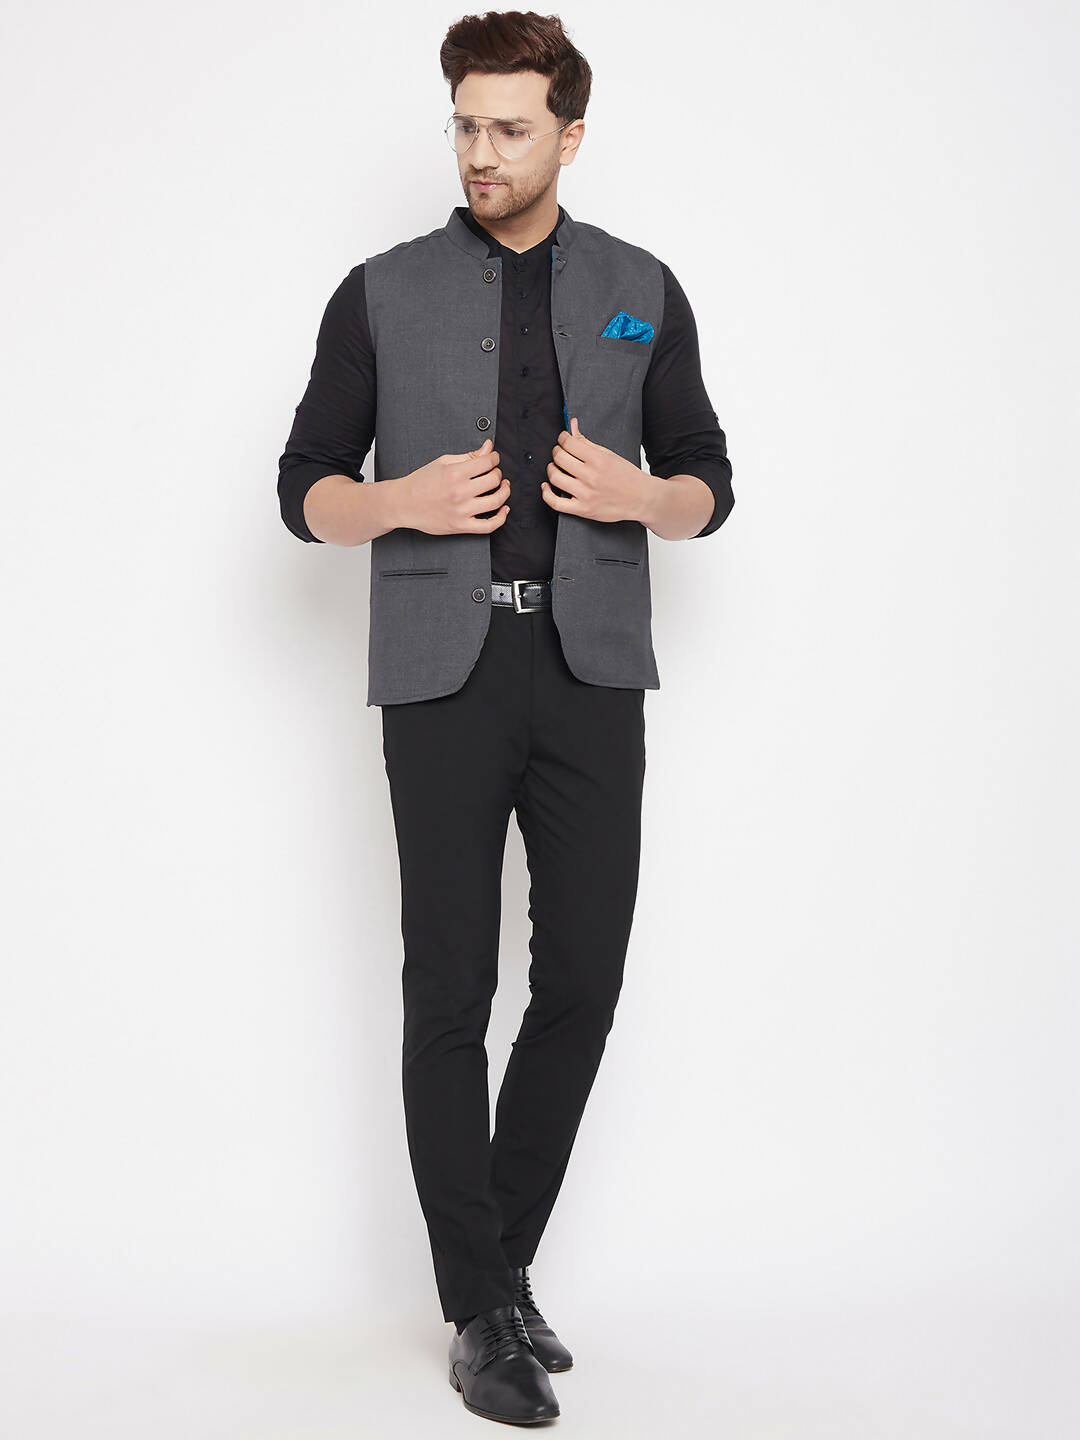 Formal Trousers Jackets Heels Tie Cufflink Pocket Square Combo Pack - Buy  Formal Trousers Jackets Heels Tie Cufflink Pocket Square Combo Pack online  in India